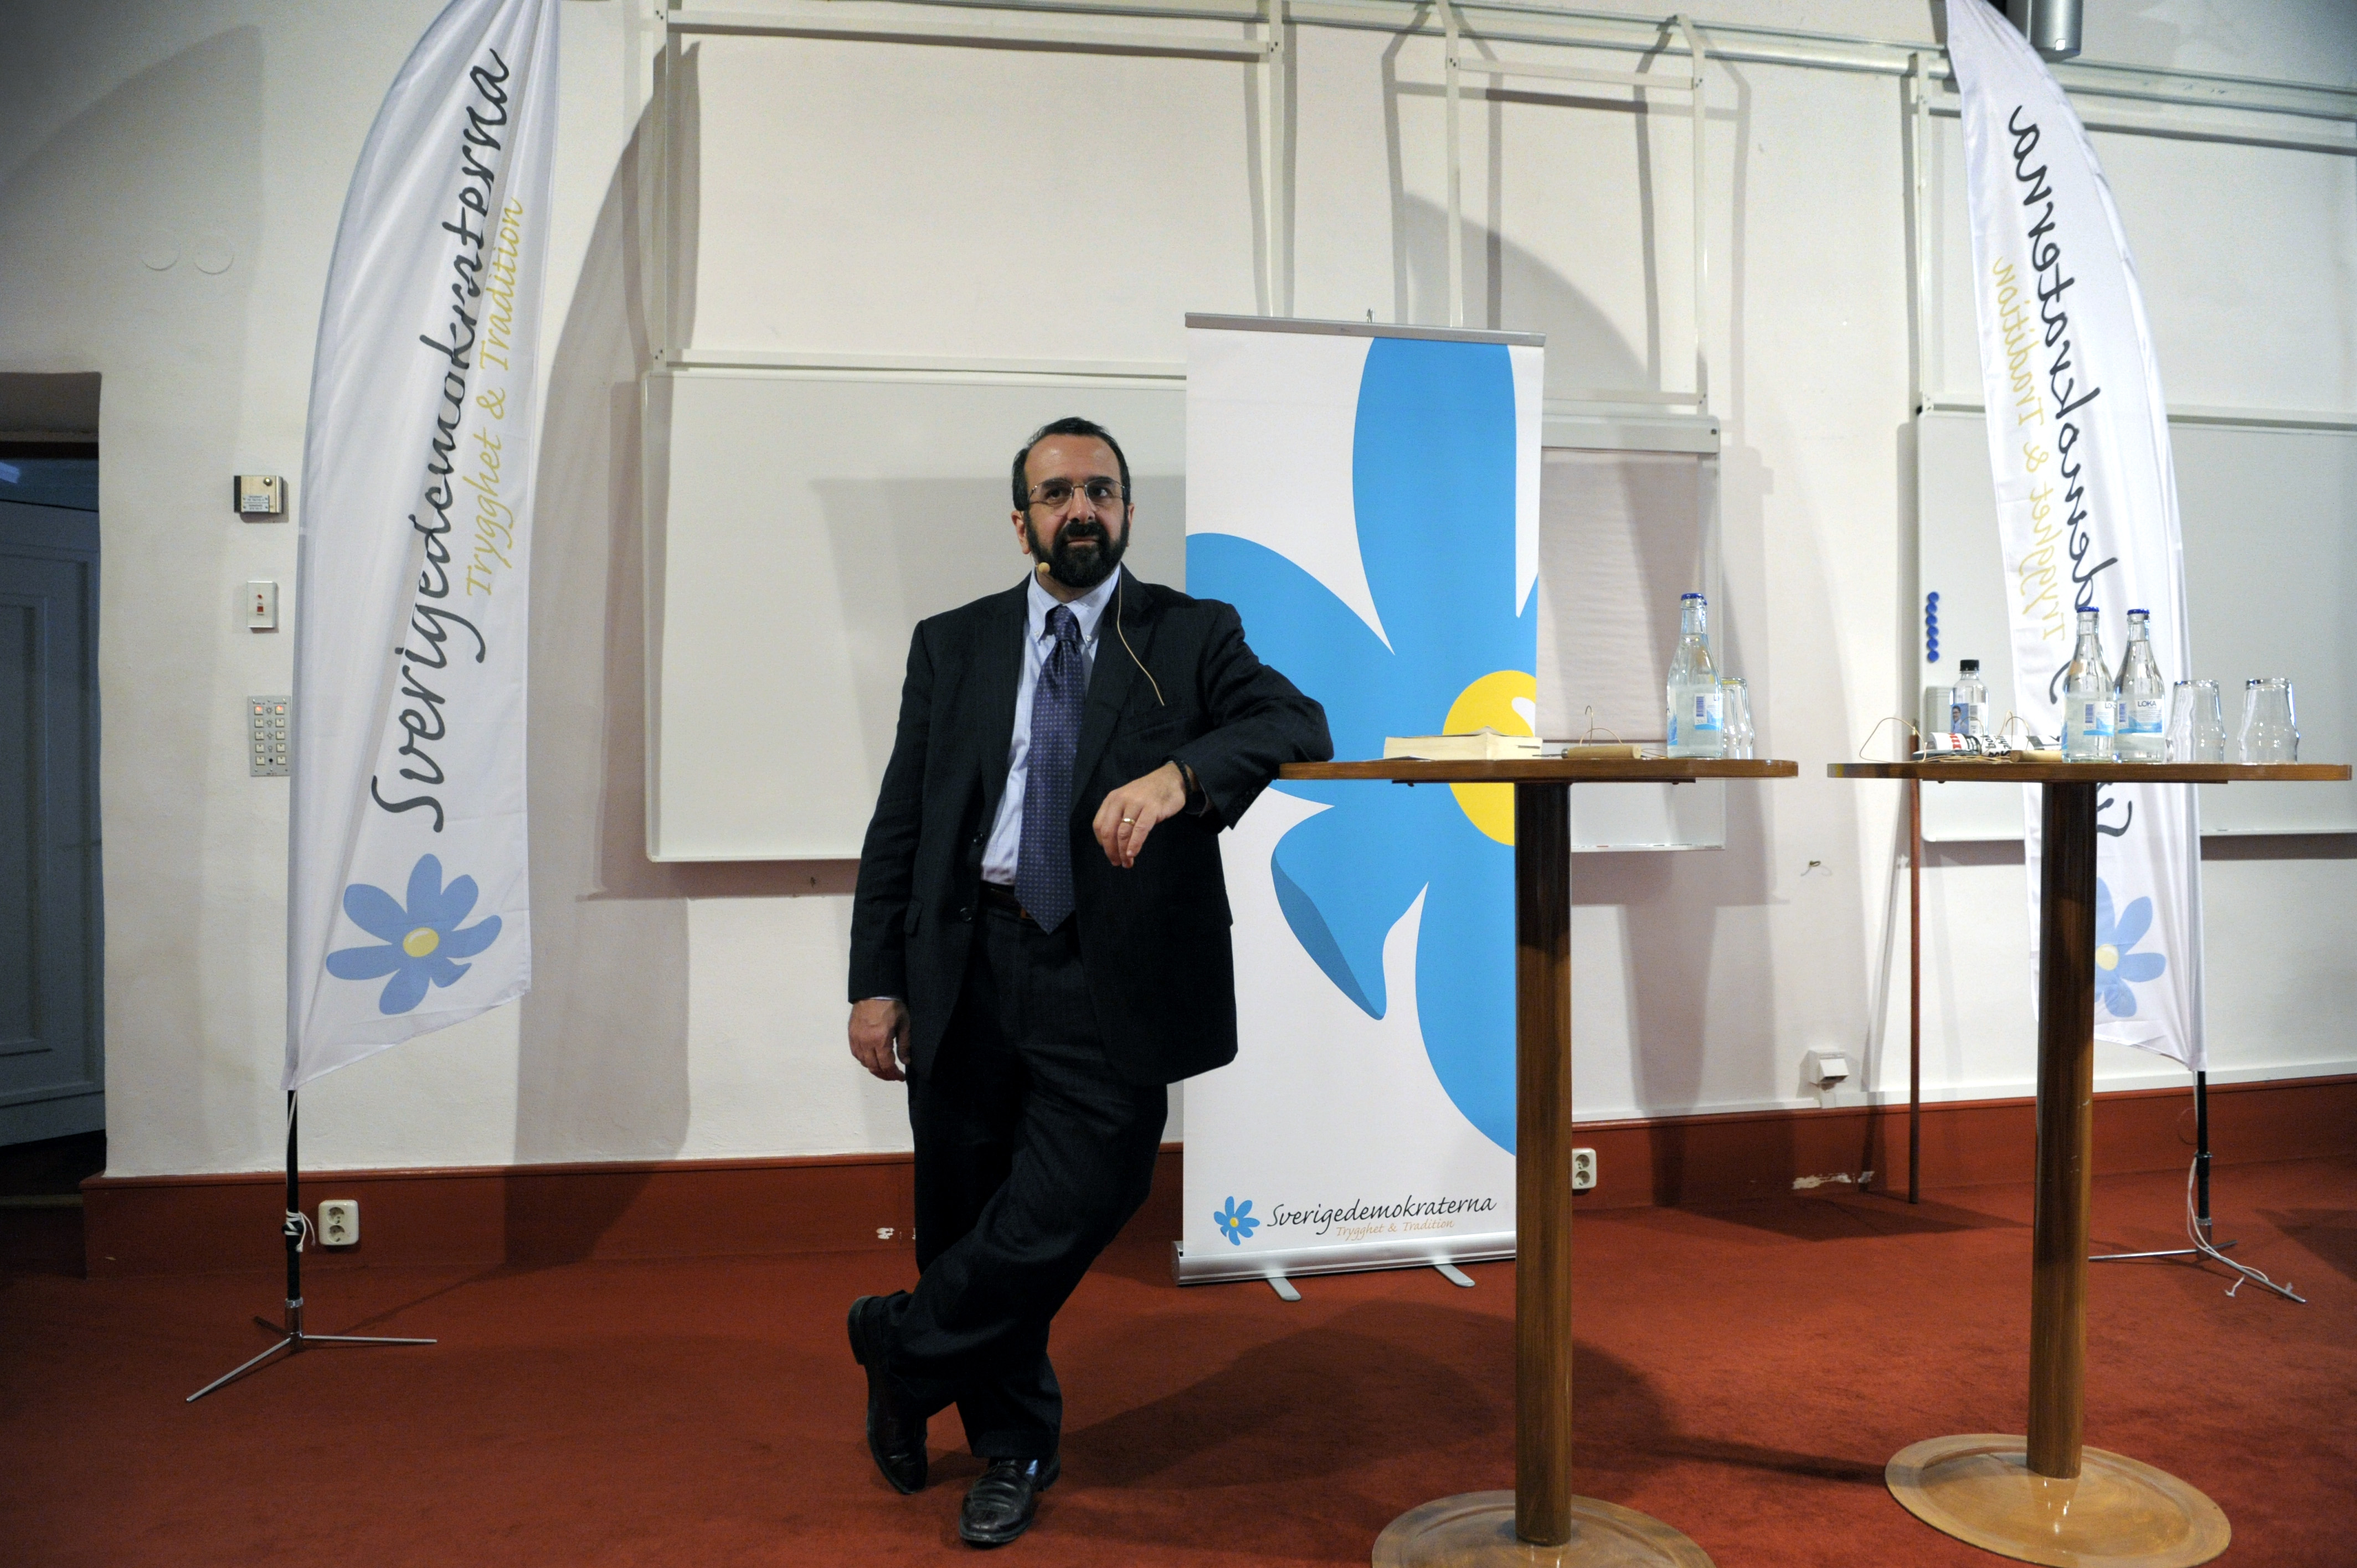 Almedalen, Robert Spencer, Riksdagsvalet 2010, Sverigedemokraterna, Islam